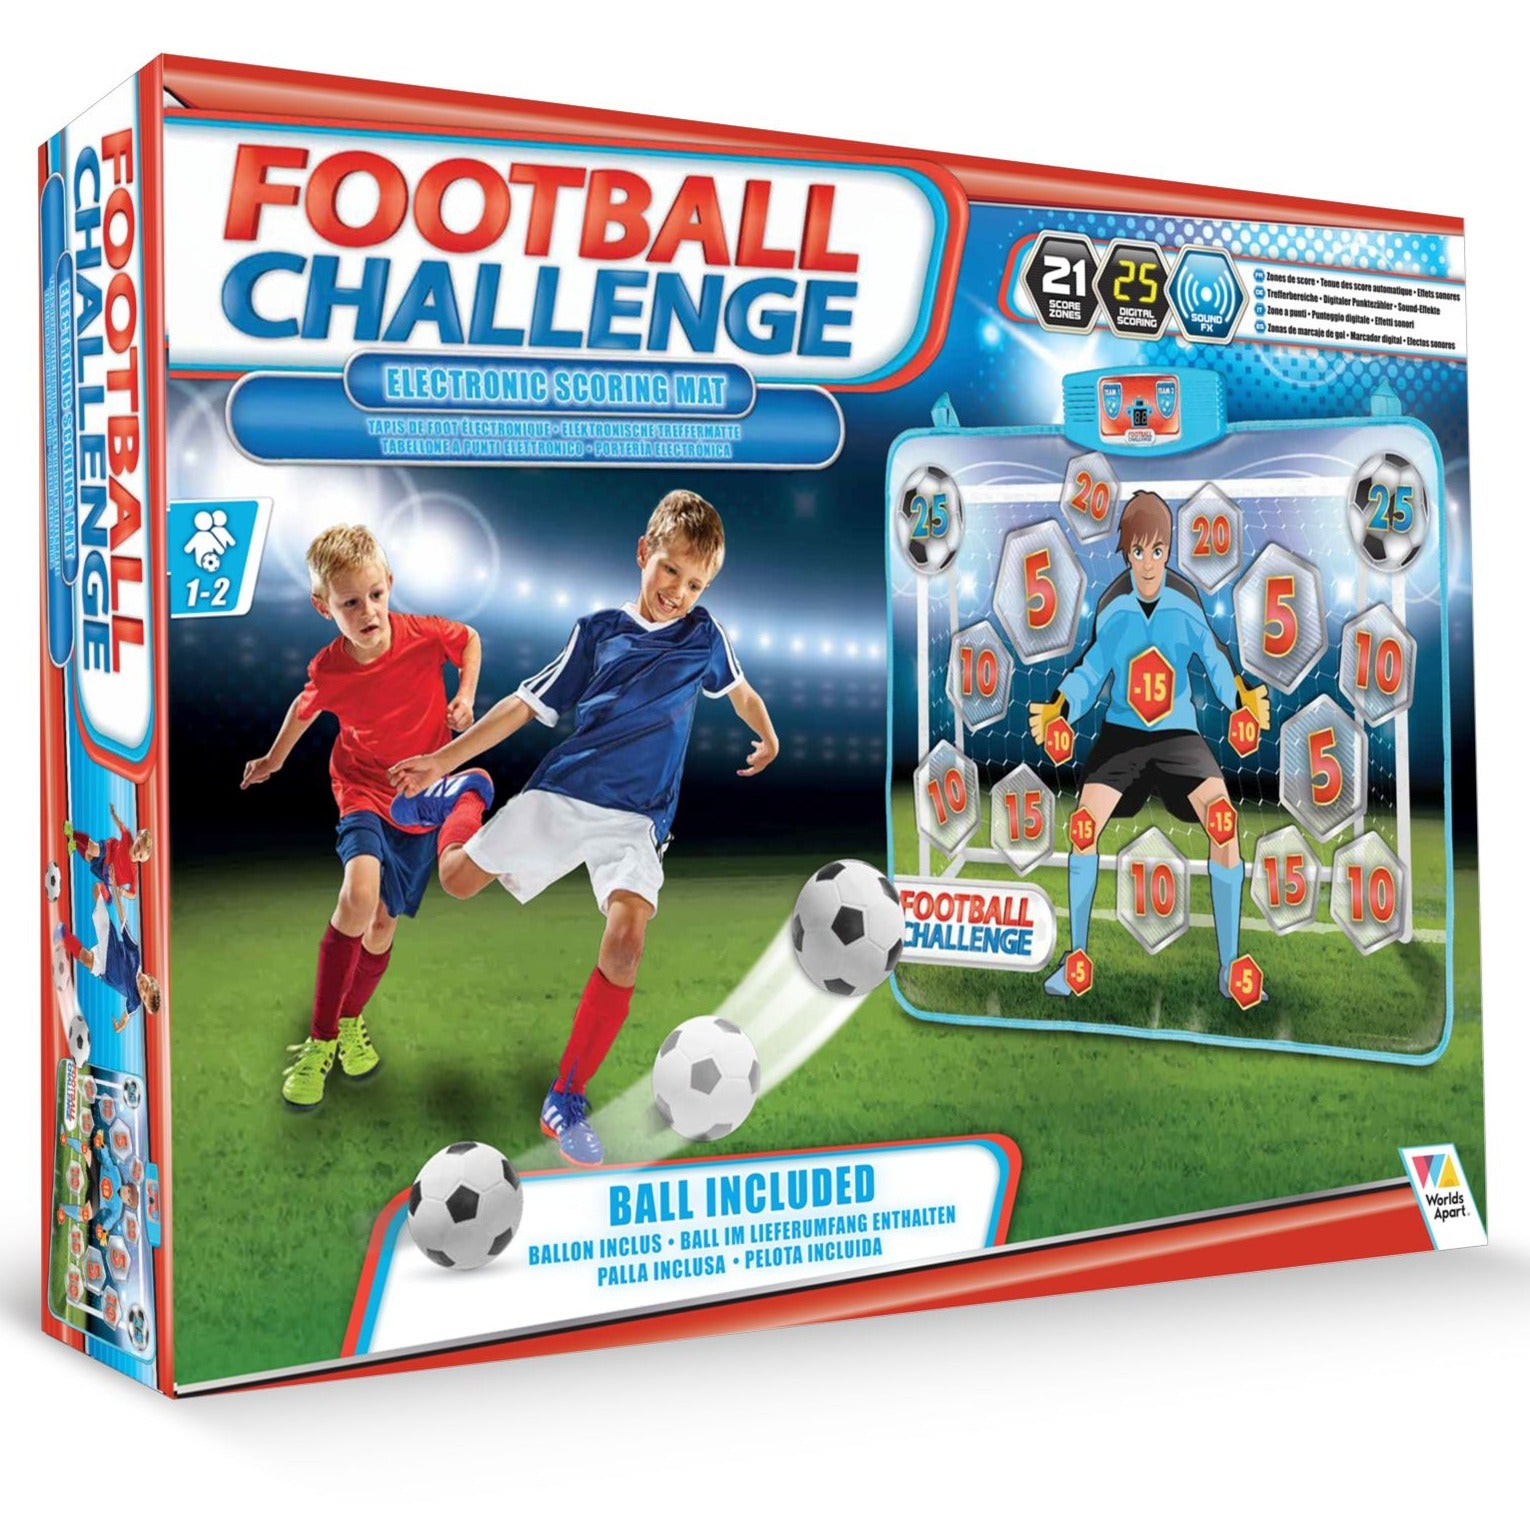 Football Challenge Electronic Scoring Mat by WorldsApart